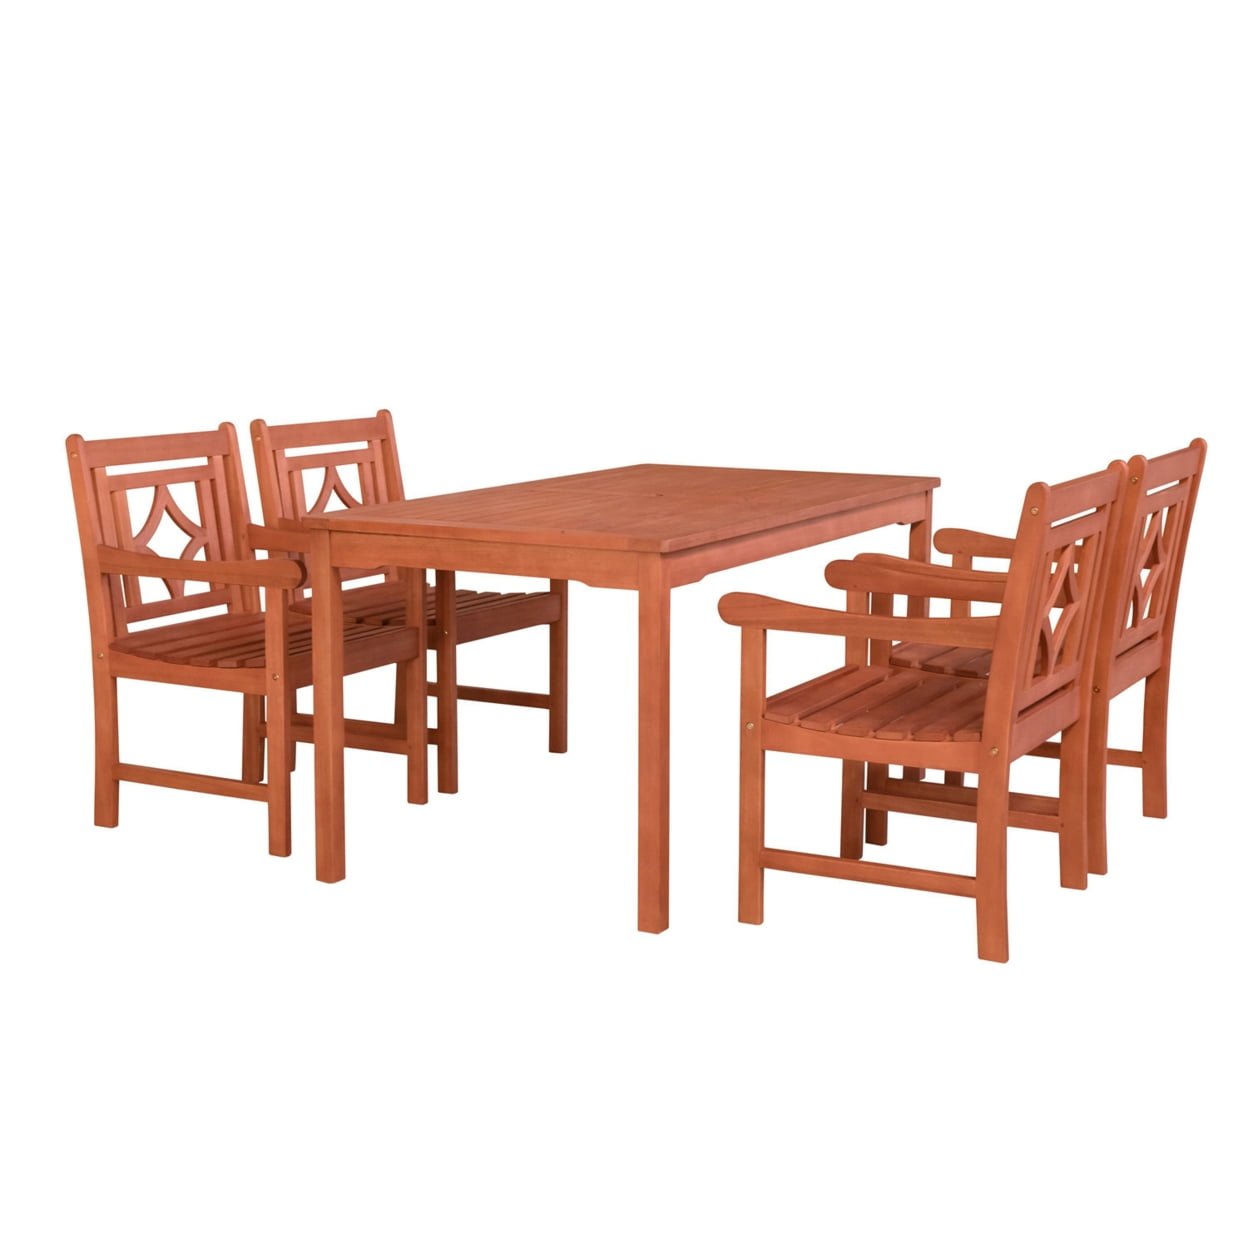 V98set64 Malibu Outdoor Wood Patio Rectangular Table Dining Set - Natural Wood - 34 X 22 X 24 In. - 5 Piece